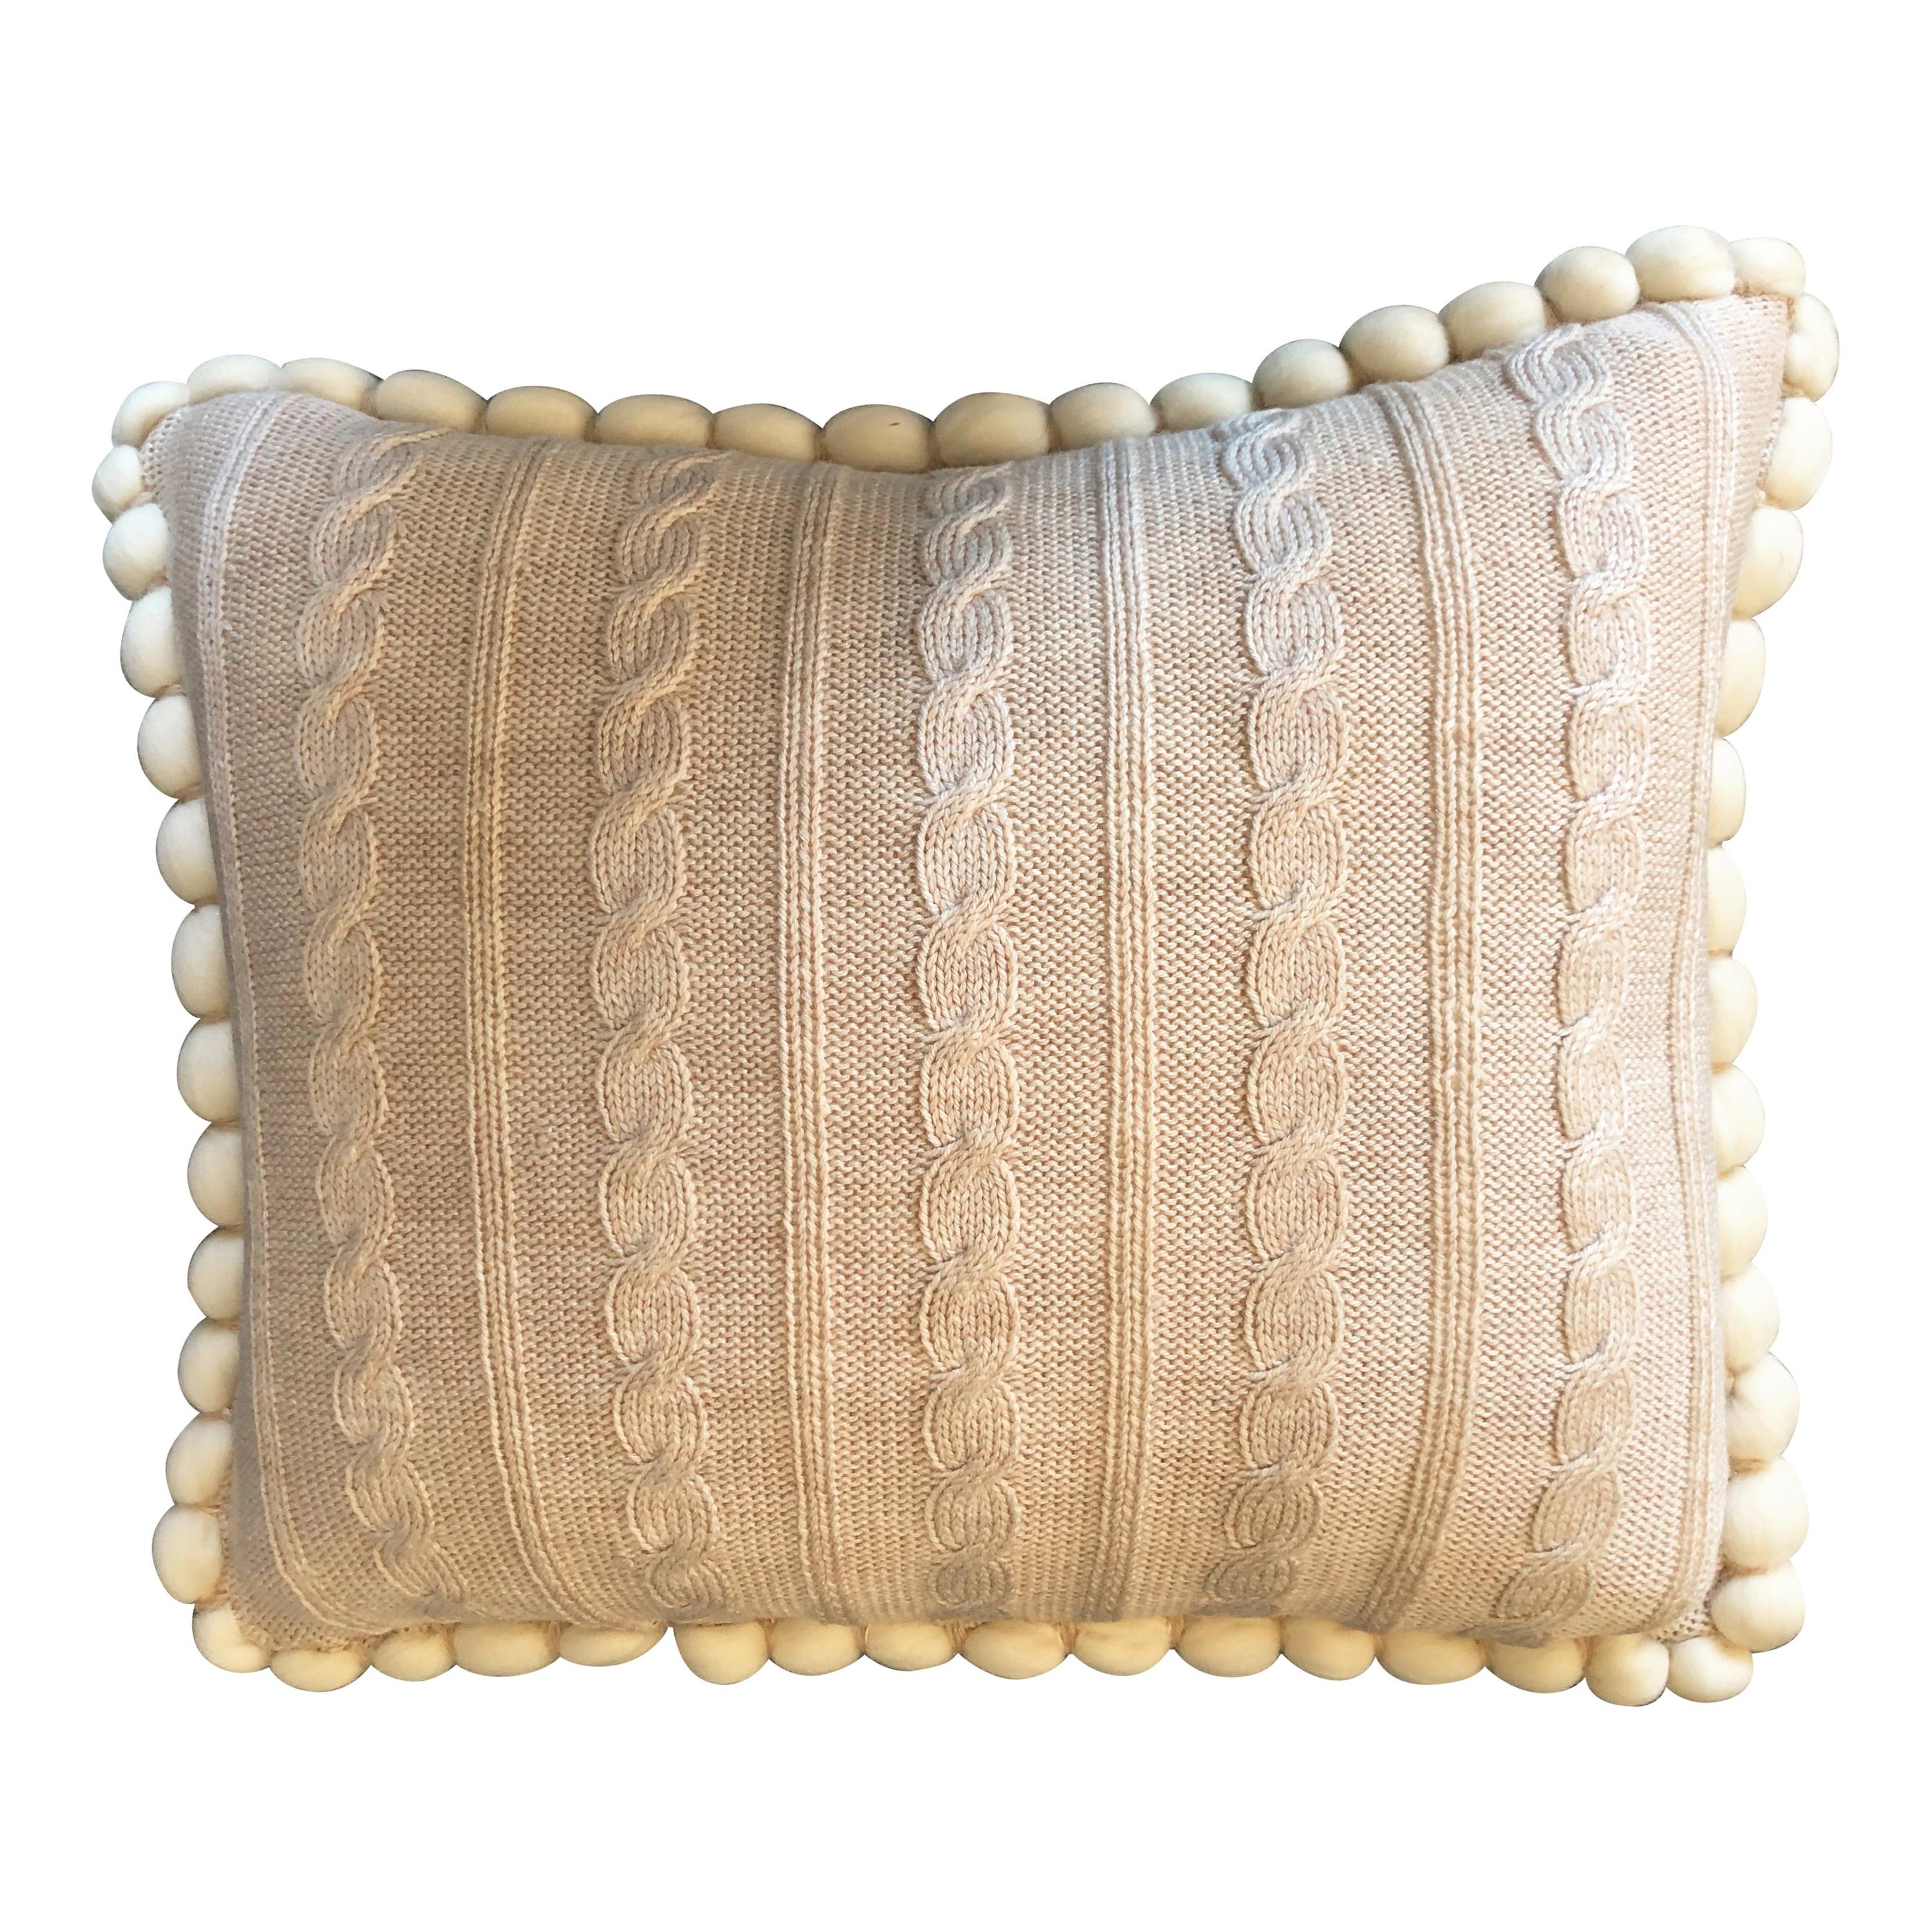 Italian Merino Wool "Cableknit" Pillow by Le Lampade